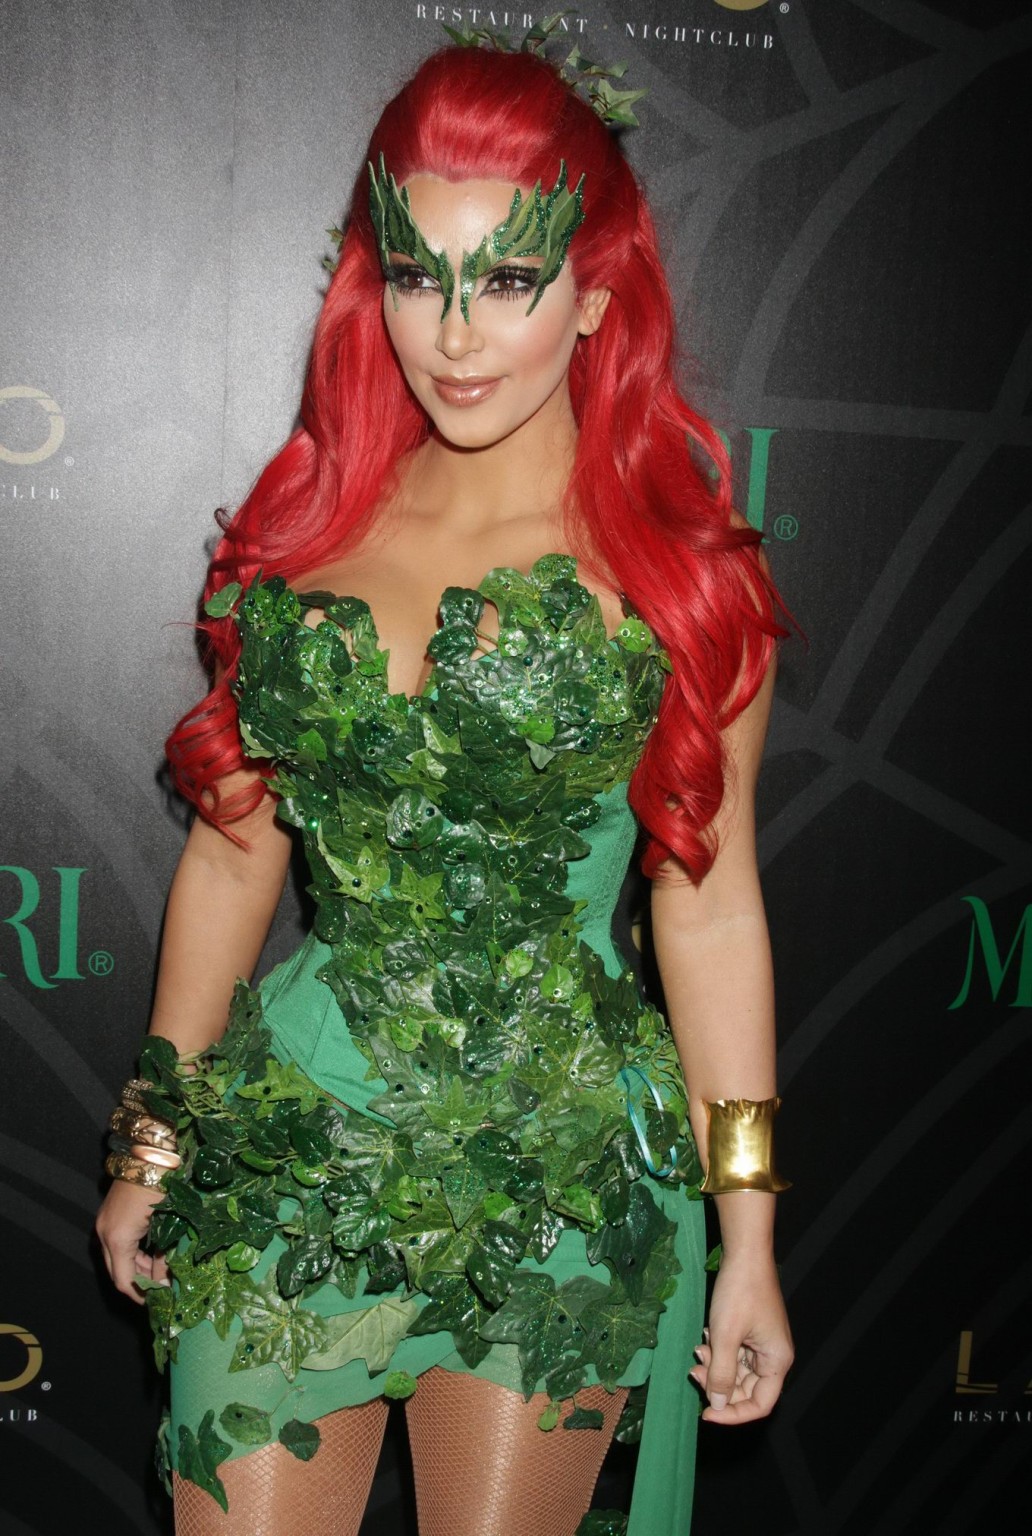 Kim kardashian vollbusig bei grüner midory halloween party in las vegas
 #75283858